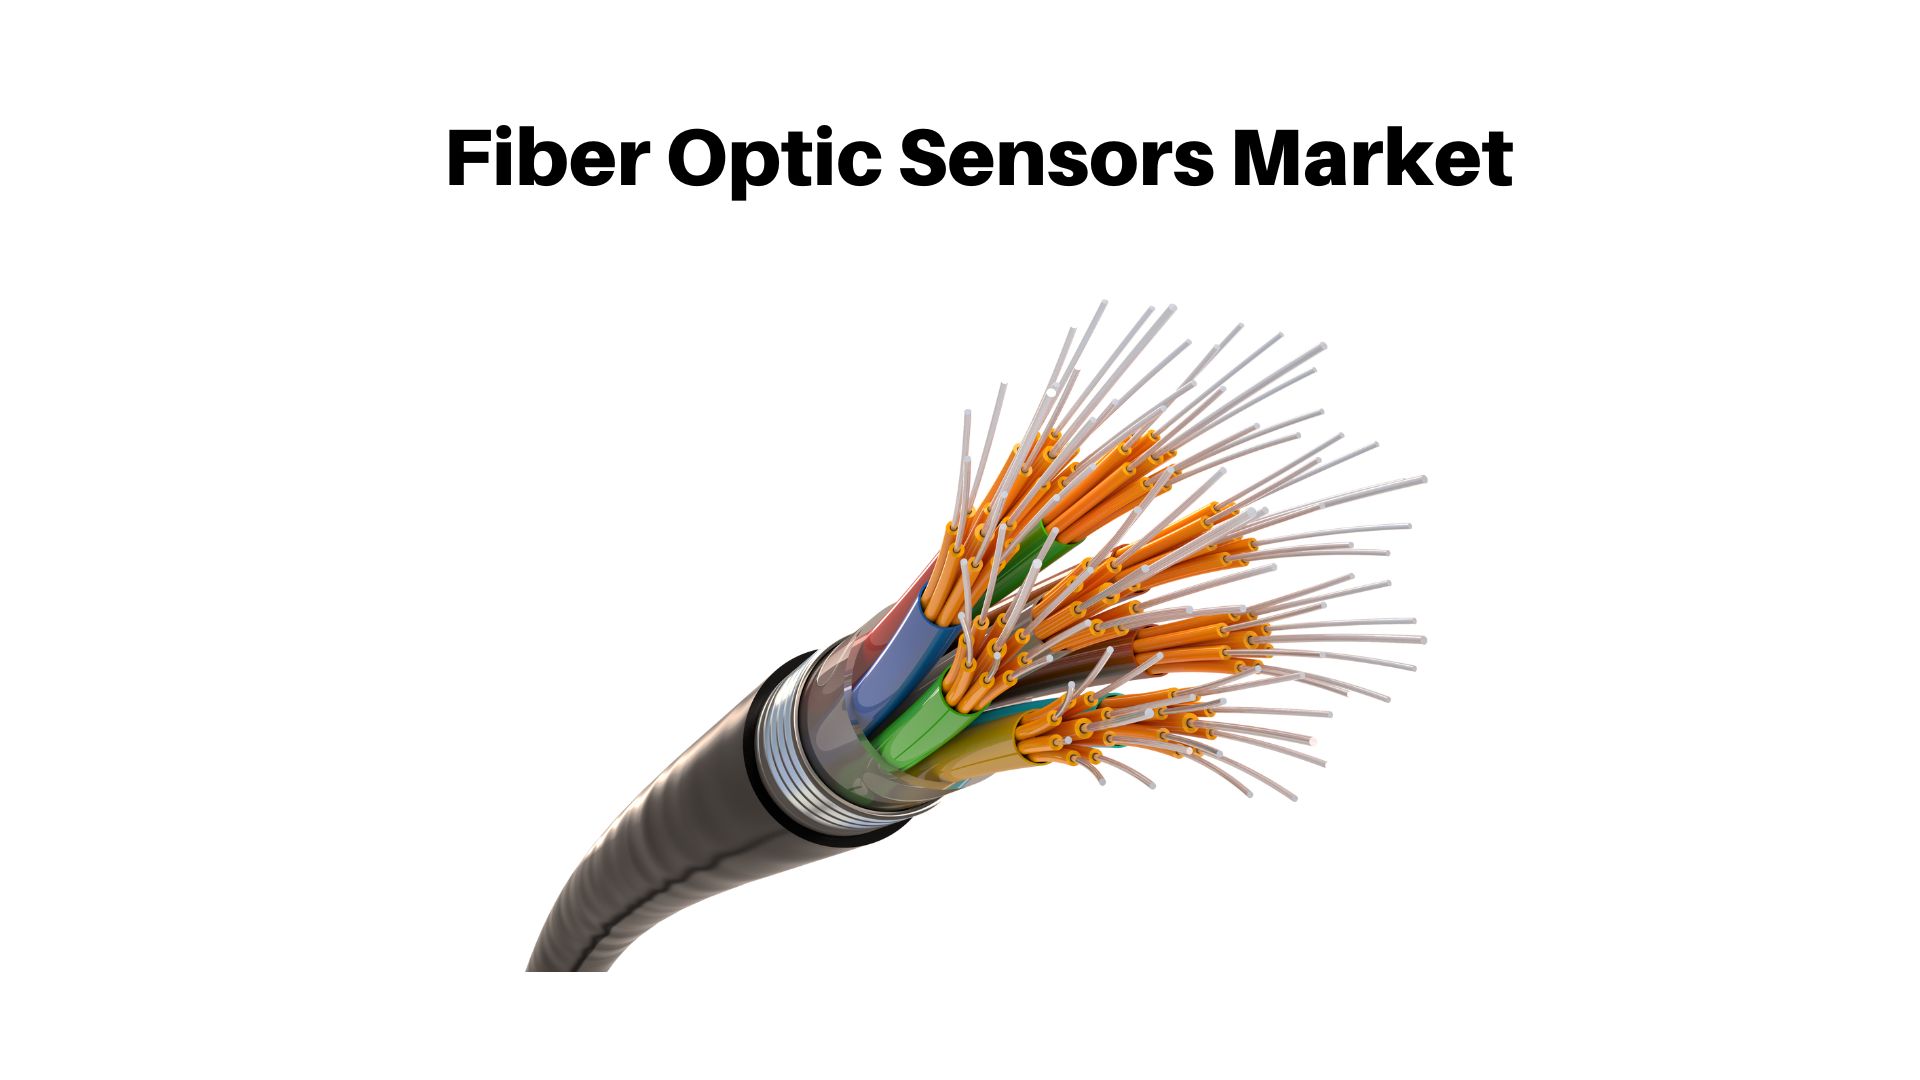 Fiber Optic Sensors Market Economic Growth CAGR of 10.5%, 2022-2032